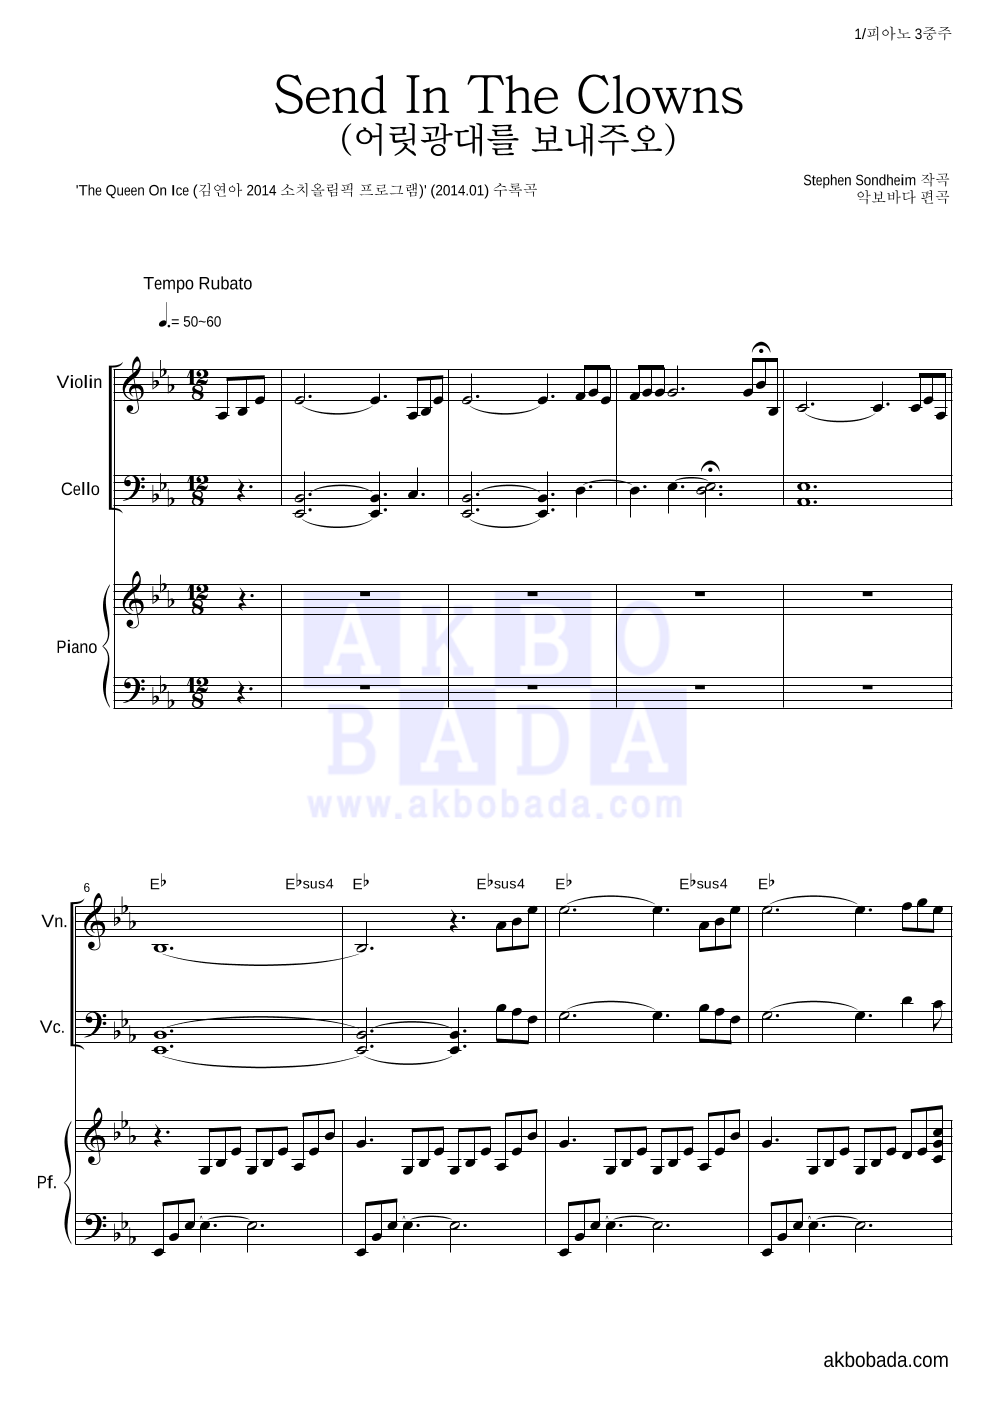 Andre Rieu & His Johann Strauss Orchestra - Send In The Clowns (어릿광대를 보내주오) (김연아 2014소치올림픽 쇼트프로그램) 피아노3중주 악보 